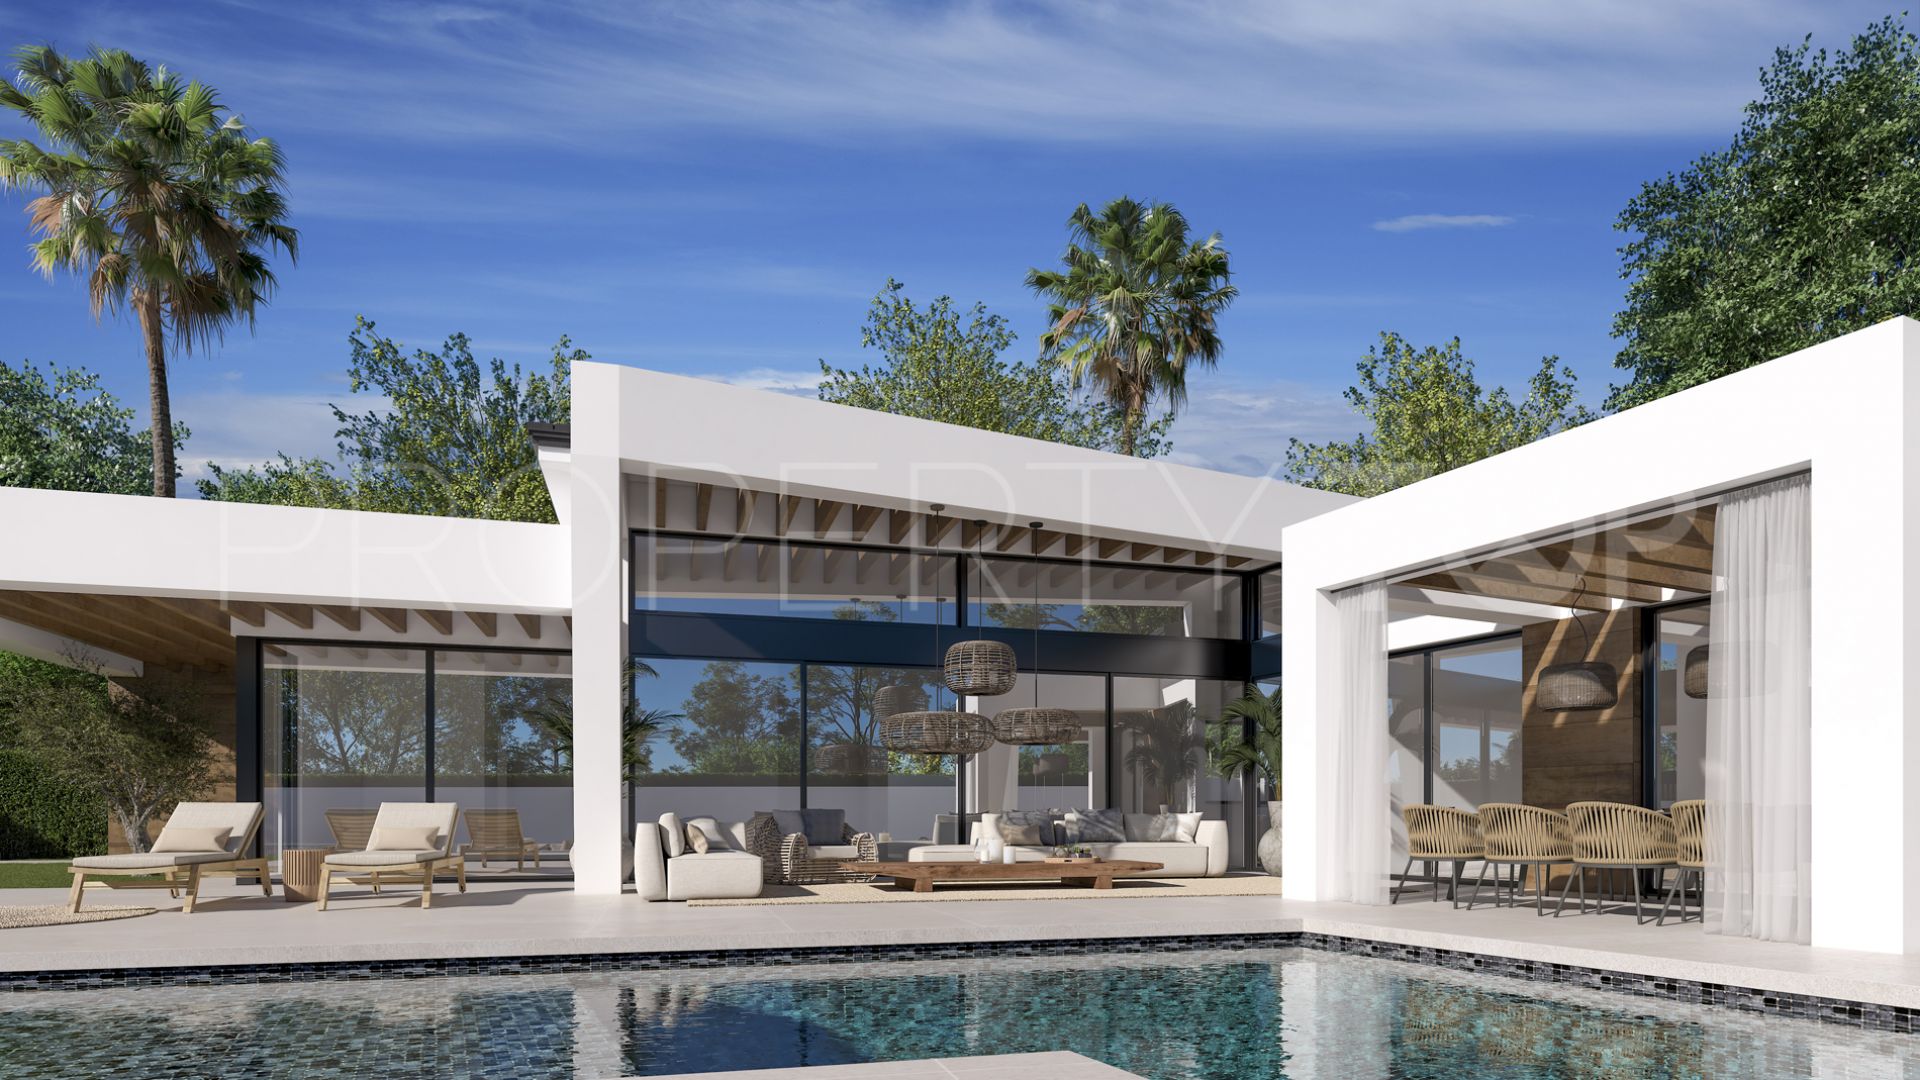 Villa for sale in Los Naranjos Golf with 4 bedrooms